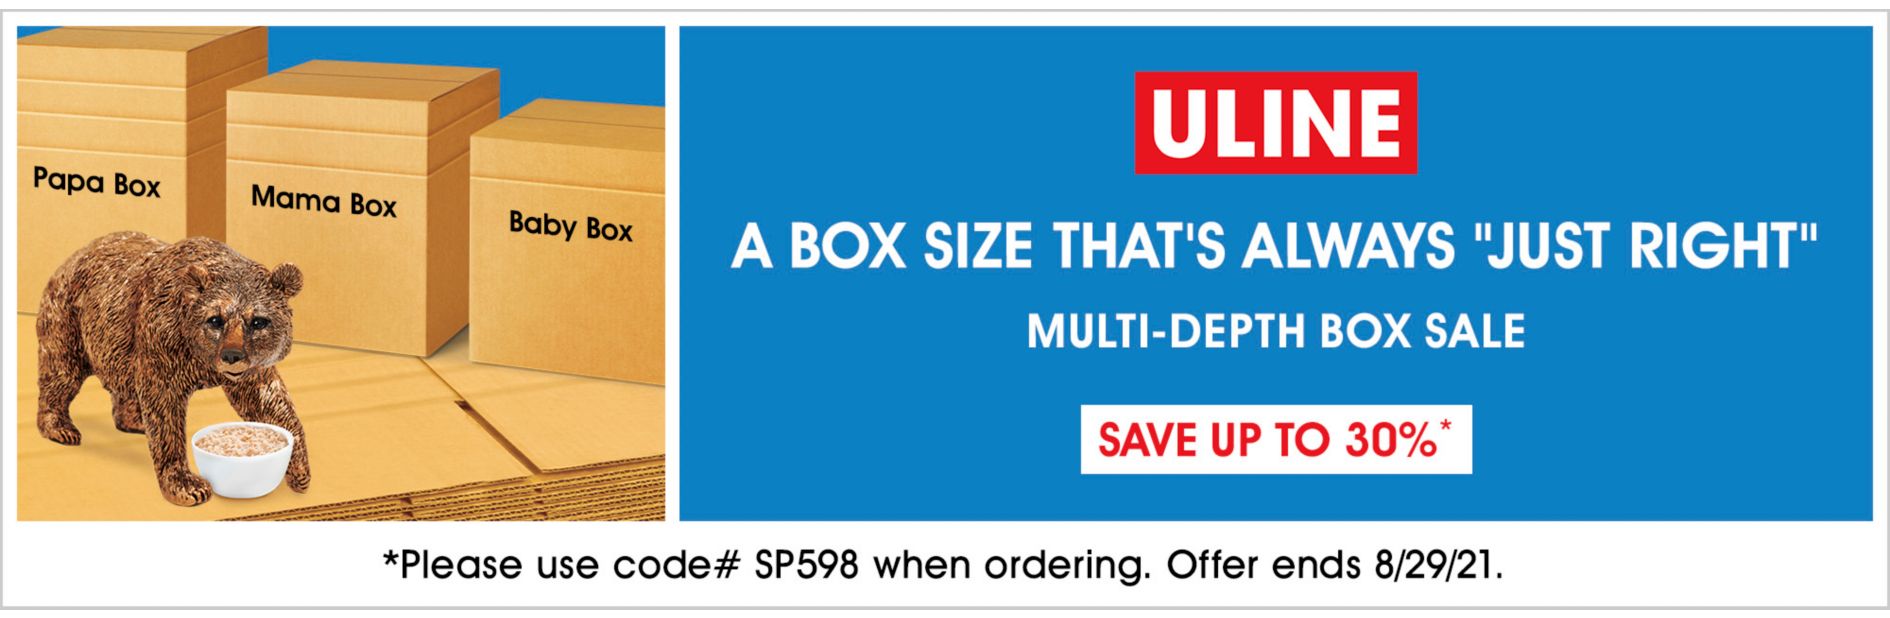 Uline 2021 MultiDepth Box Sale